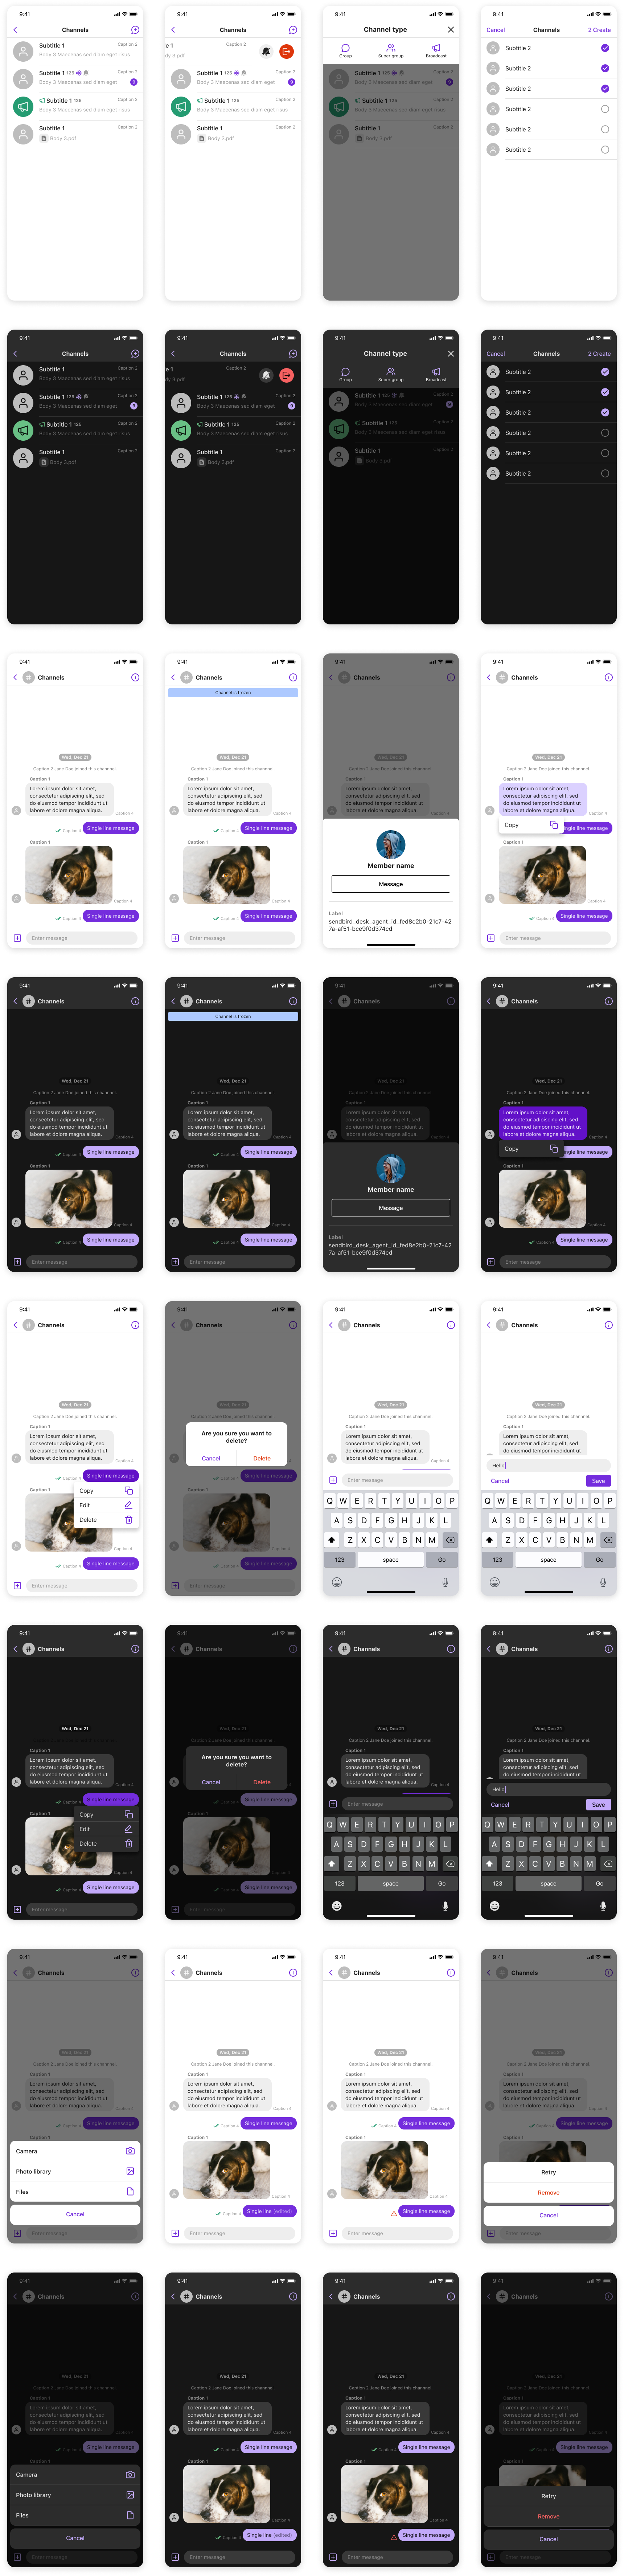 Sendbird Chat UIKit iOS聊天App UI素材下载 figma格式-UI/UX-到位啦UI